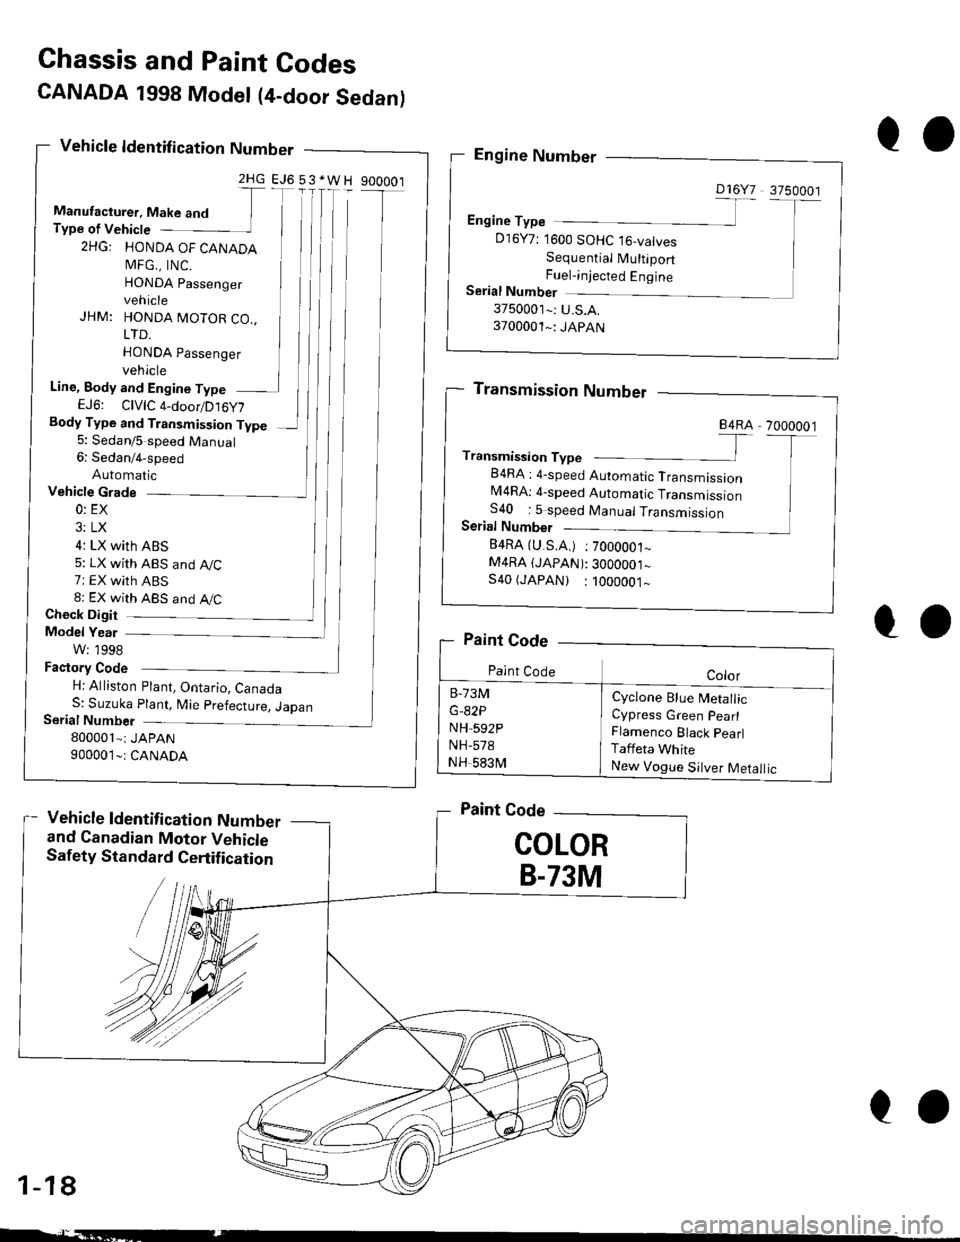 HONDA CIVIC 1997 6.G User Guide CANADA 1998 Model (4-door Sedanl
Vehicle ldentification Number
Chassis and Paint Codes
2HG.I
Manufacturer, Make andType of Vehicte I2HG: HONDA OF CANADA ]MFG,, INC.
HONDA passenger lvehicle
JHM: HONDA